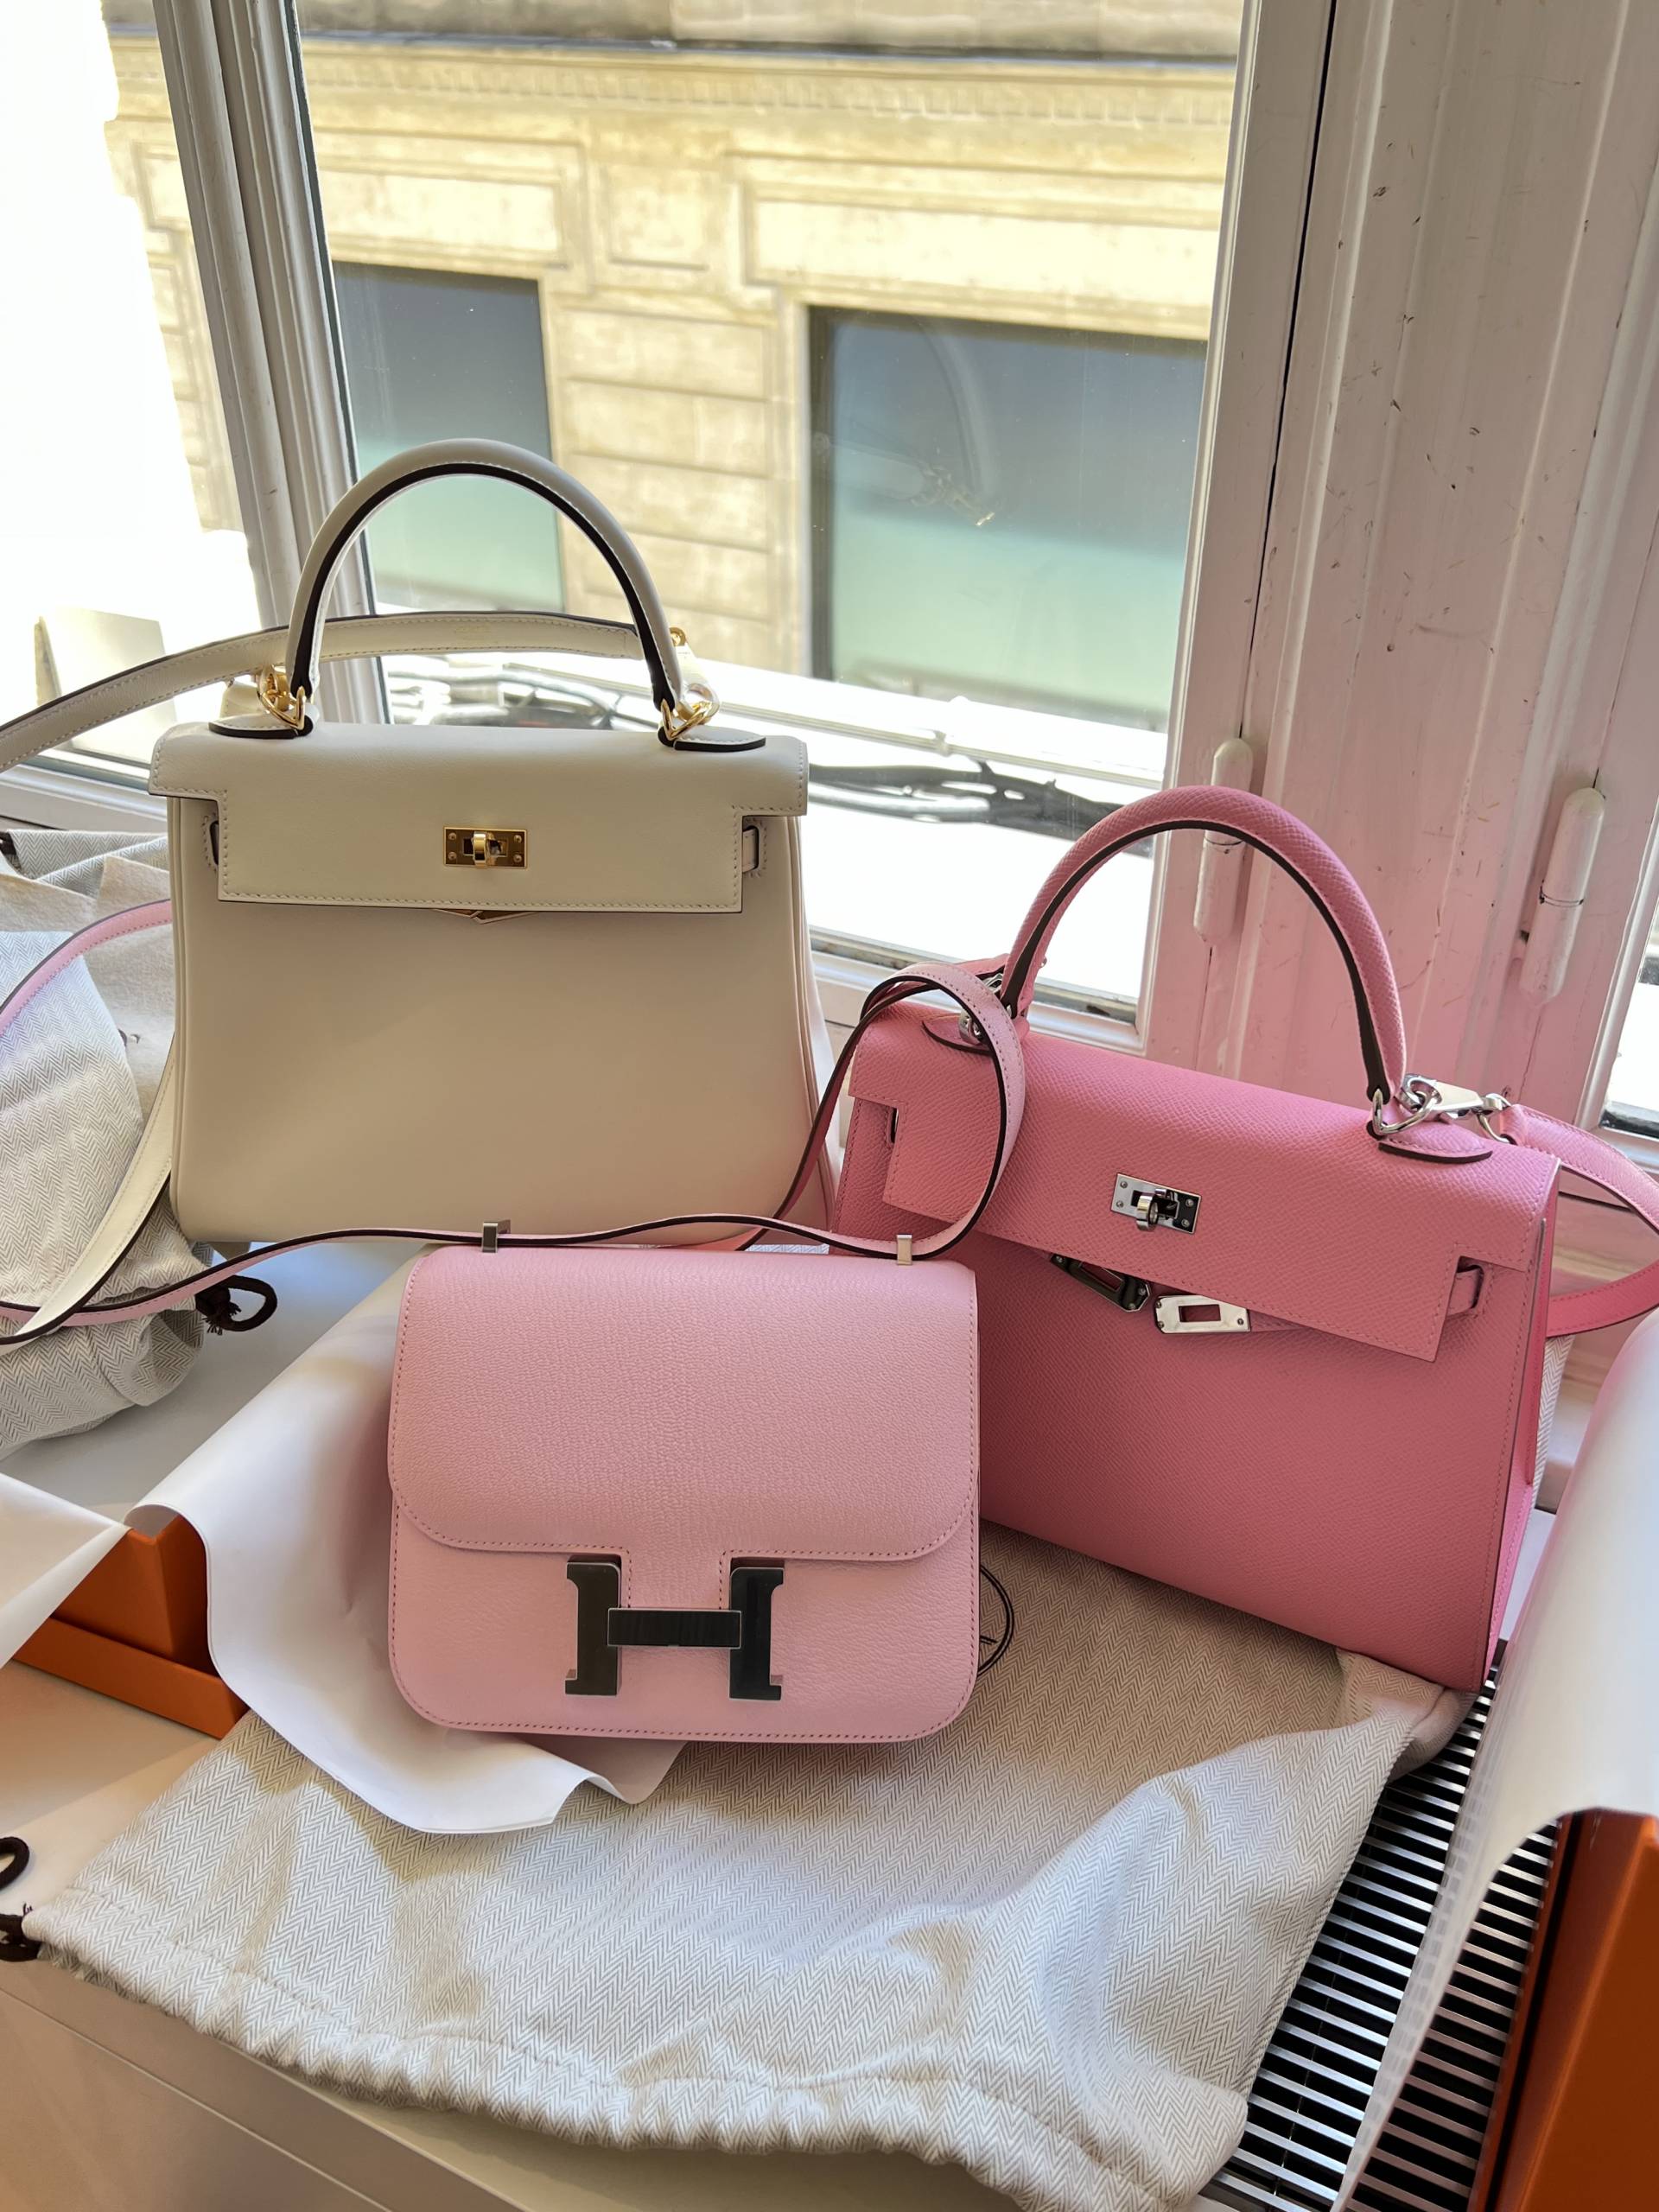 Are Handbags Becoming Gender Neutral - PurseBop